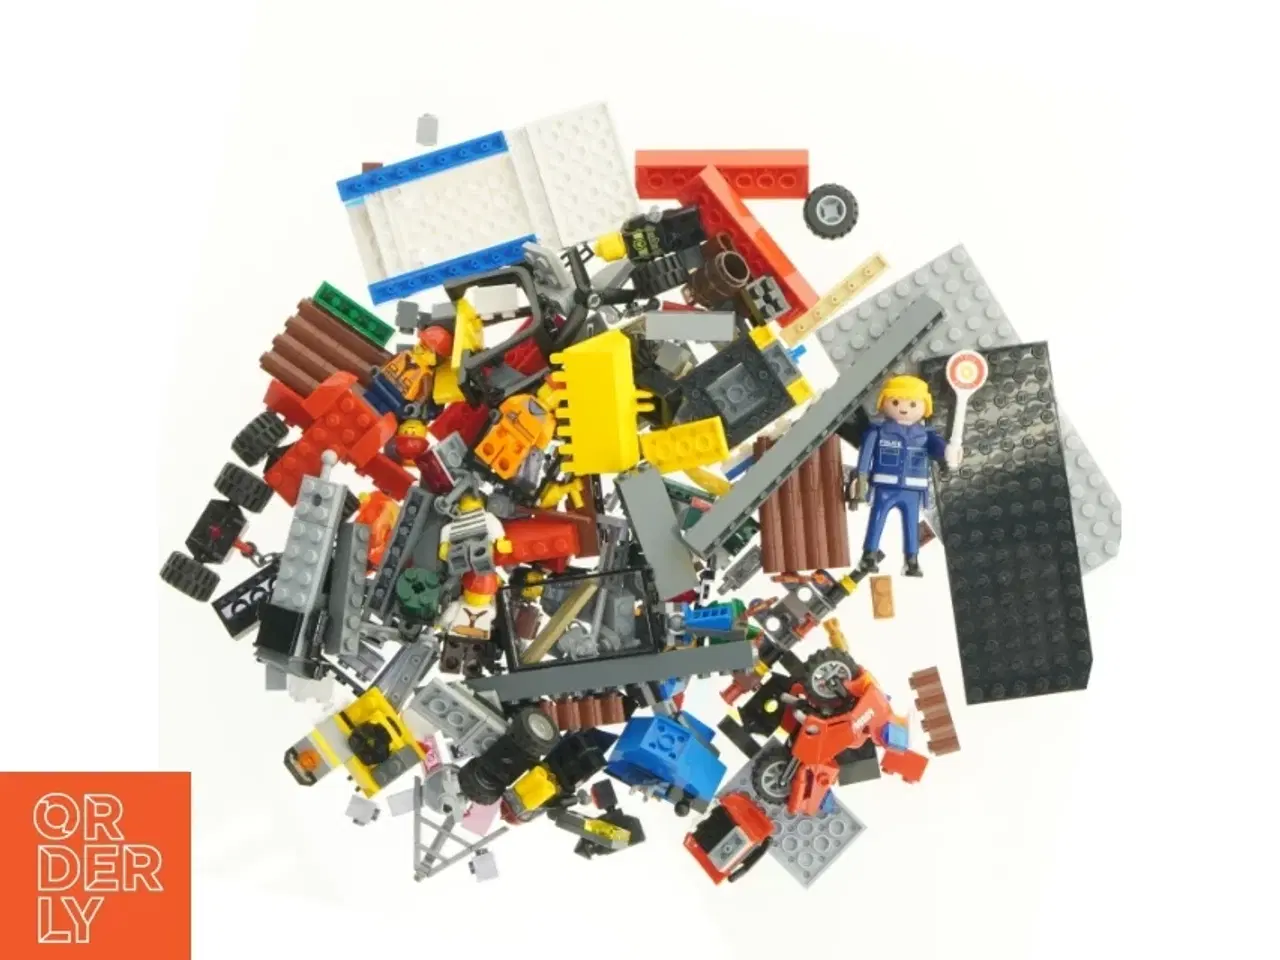 Billede 1 - Legoklodser fra Lego (str. 25 x 15 cm)